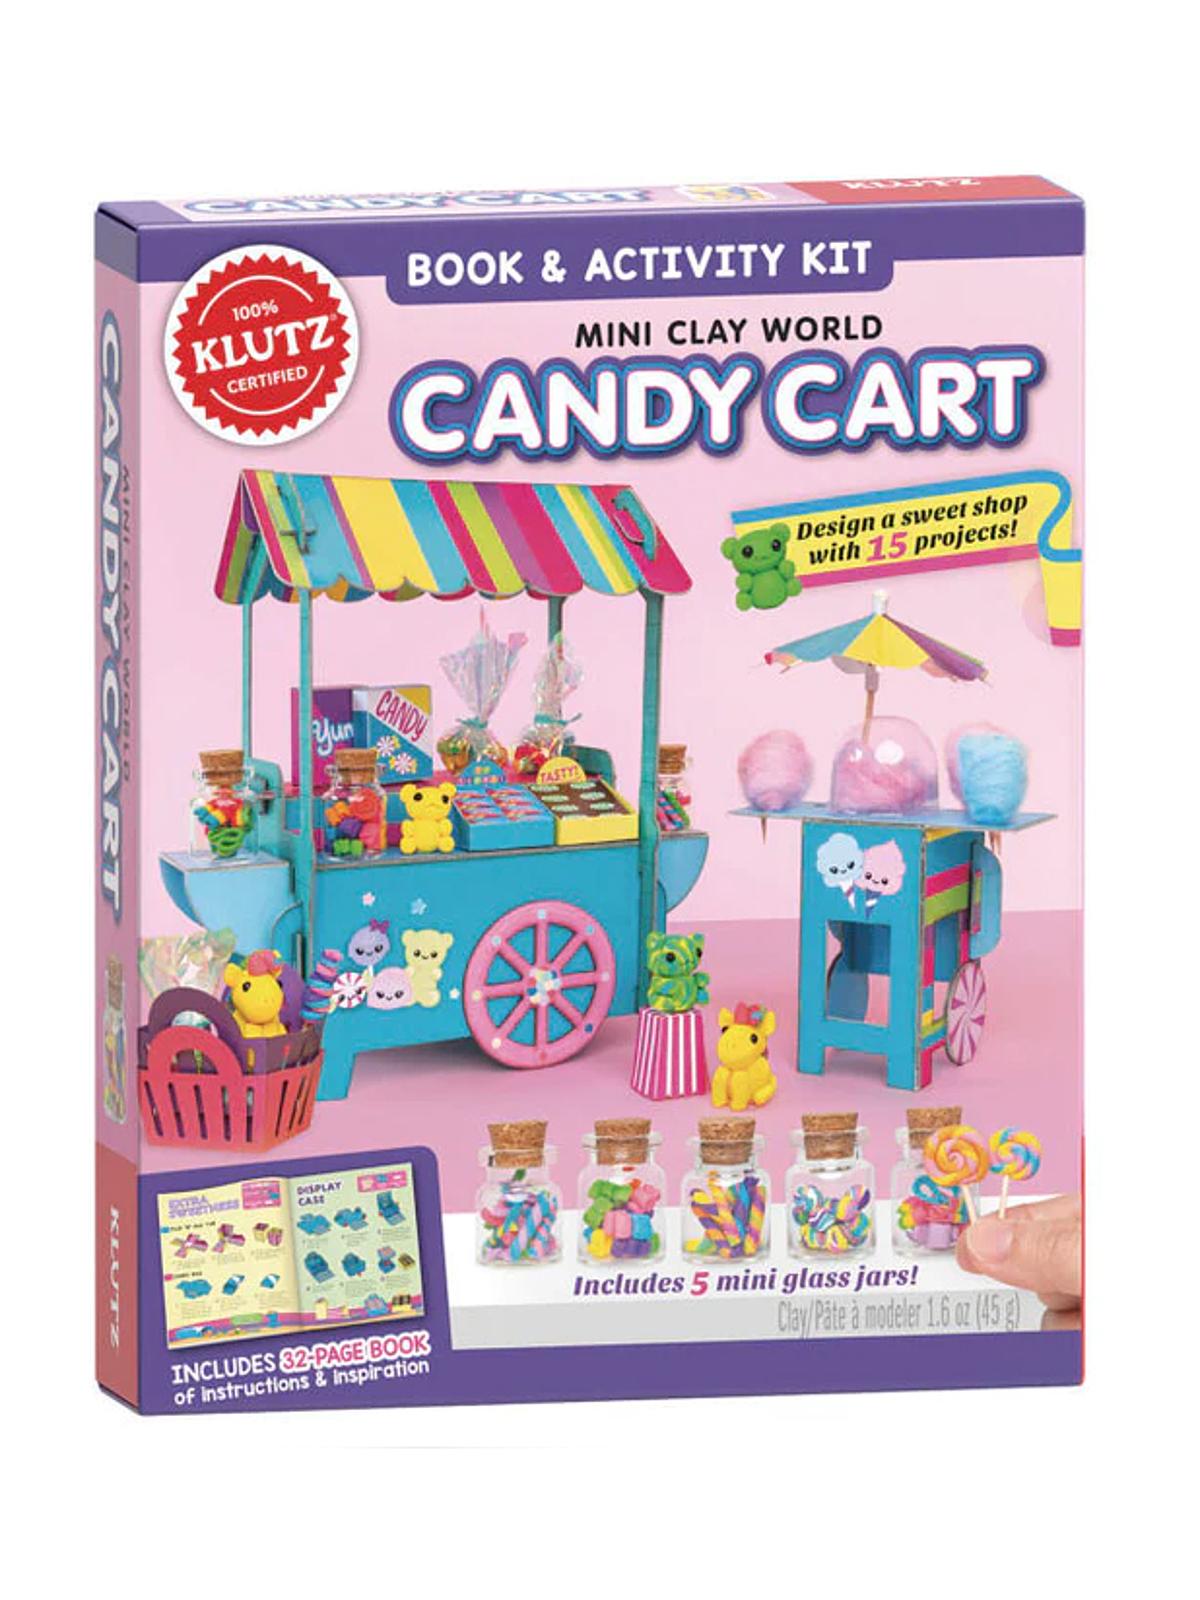 Mini Clay World Candy Cart Each